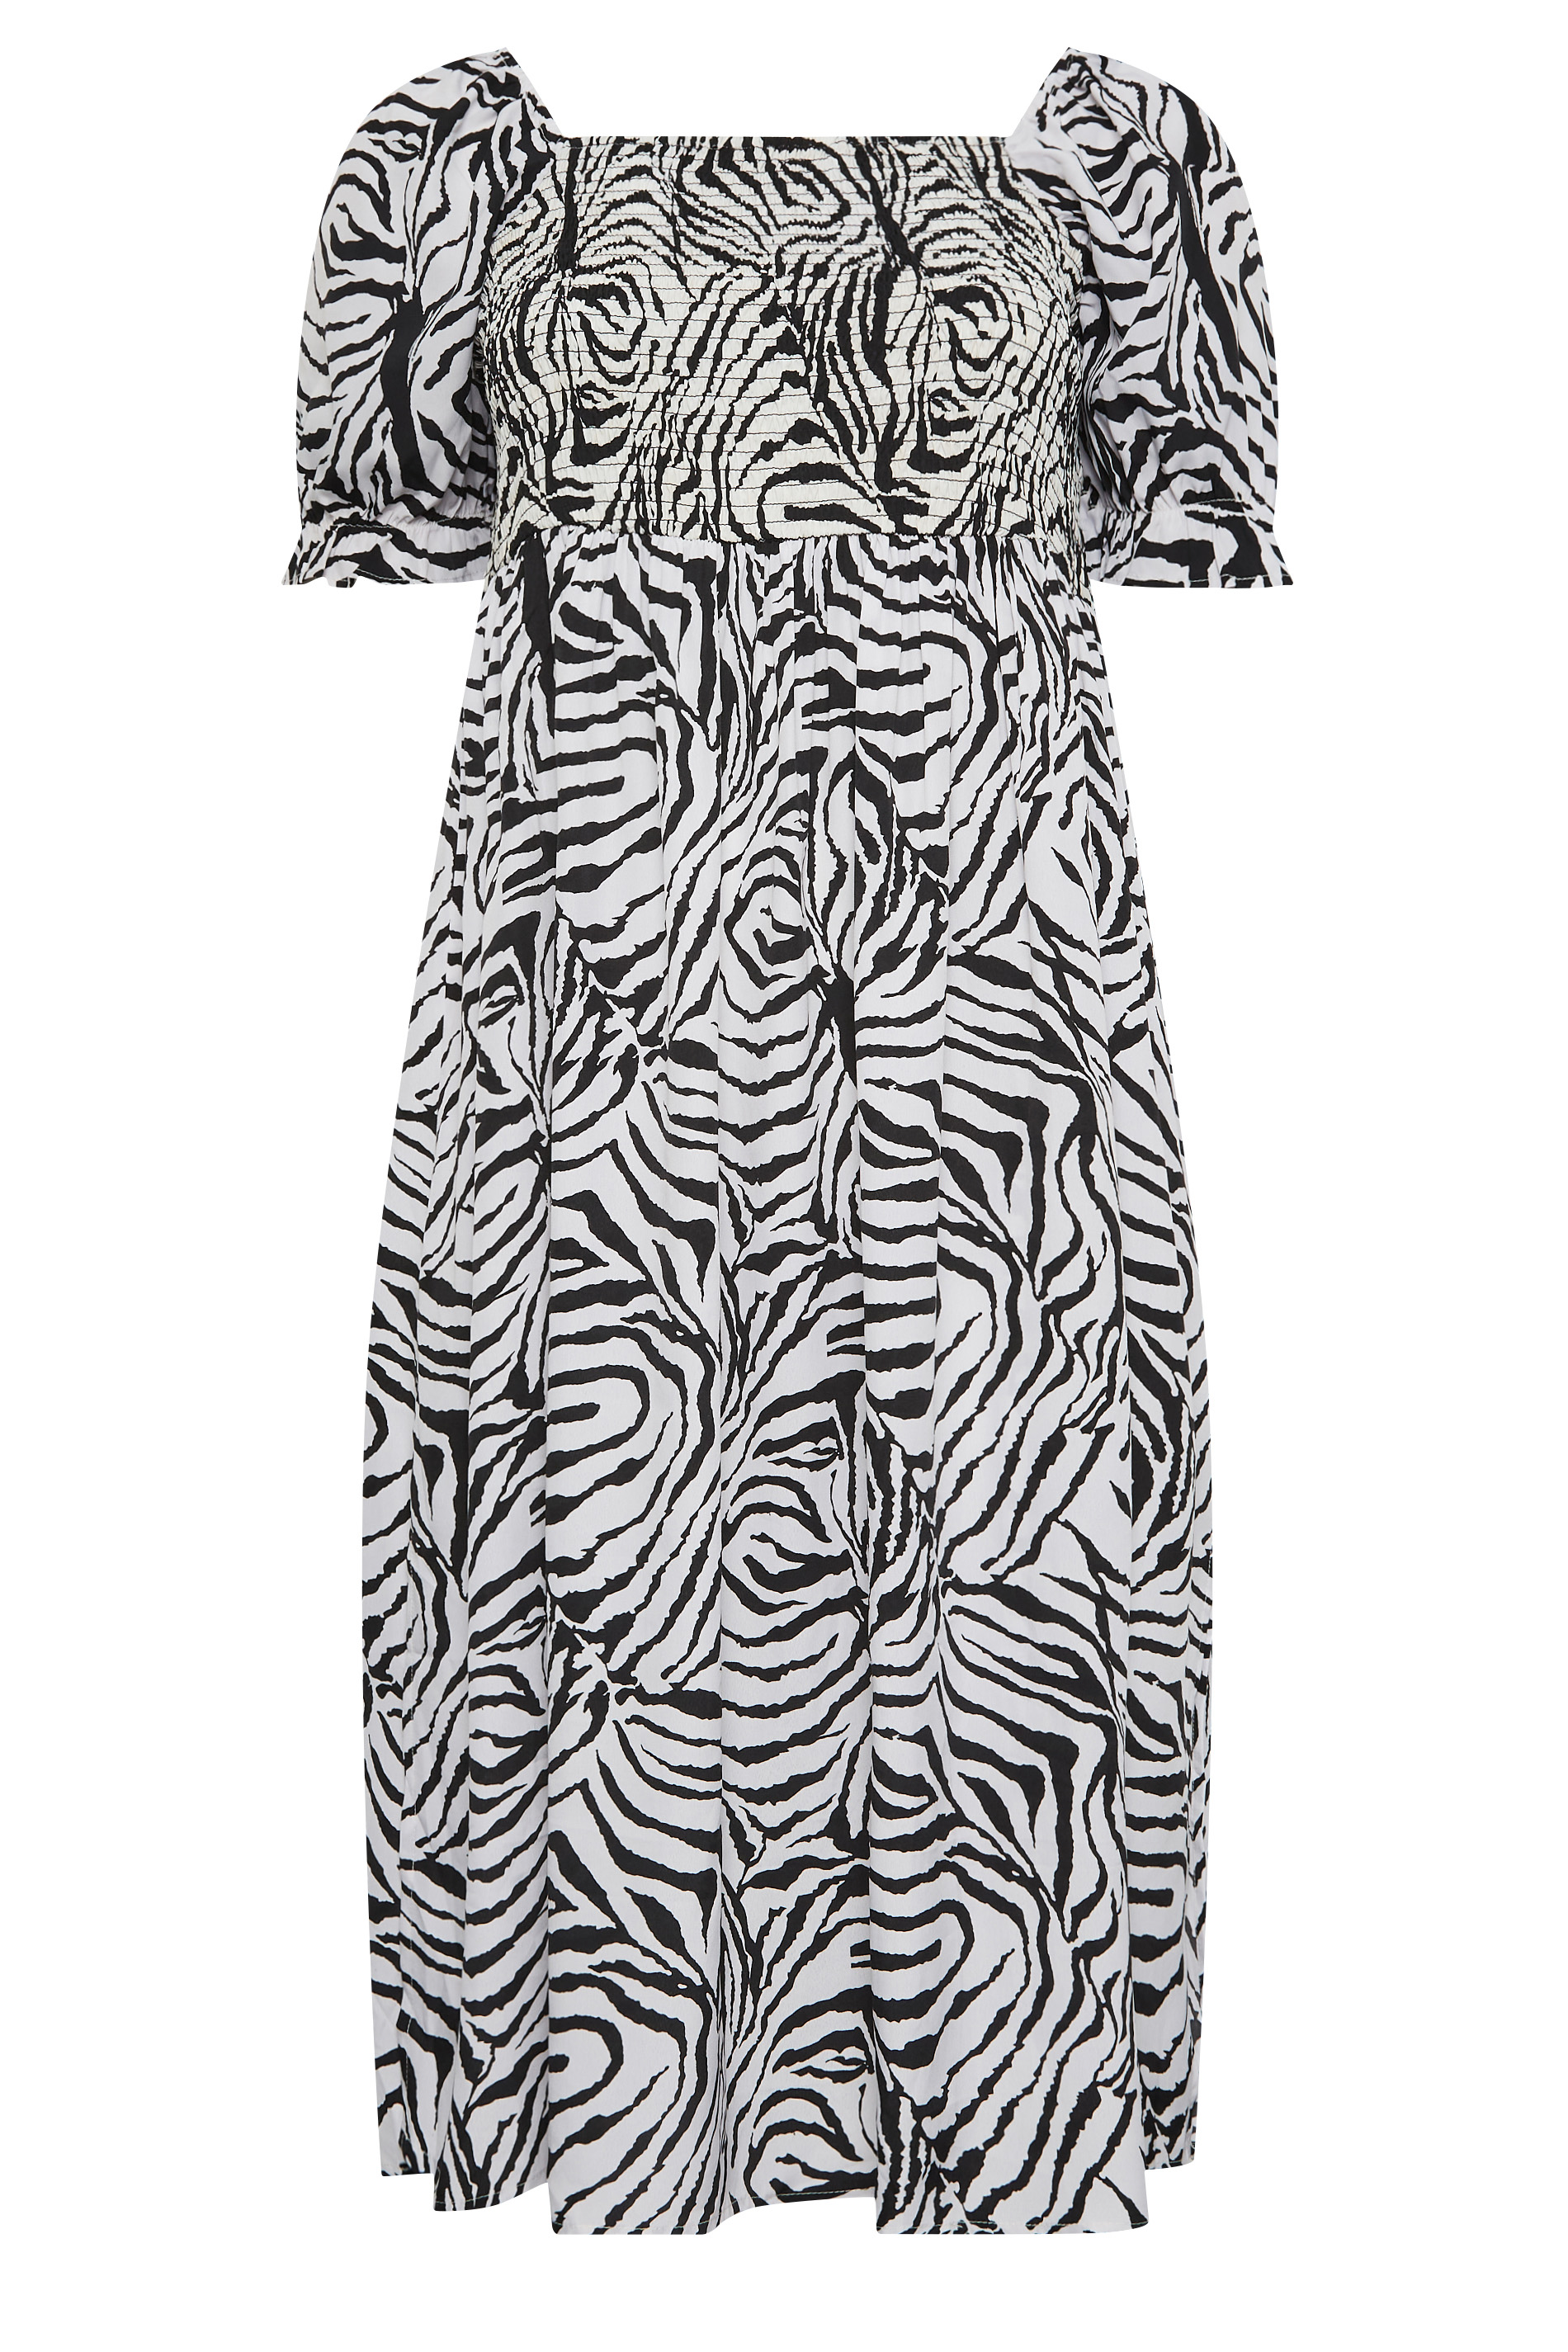 YOURS Plus Size Black & White Zebra Print Shirred Midaxi Dress | Yours ...